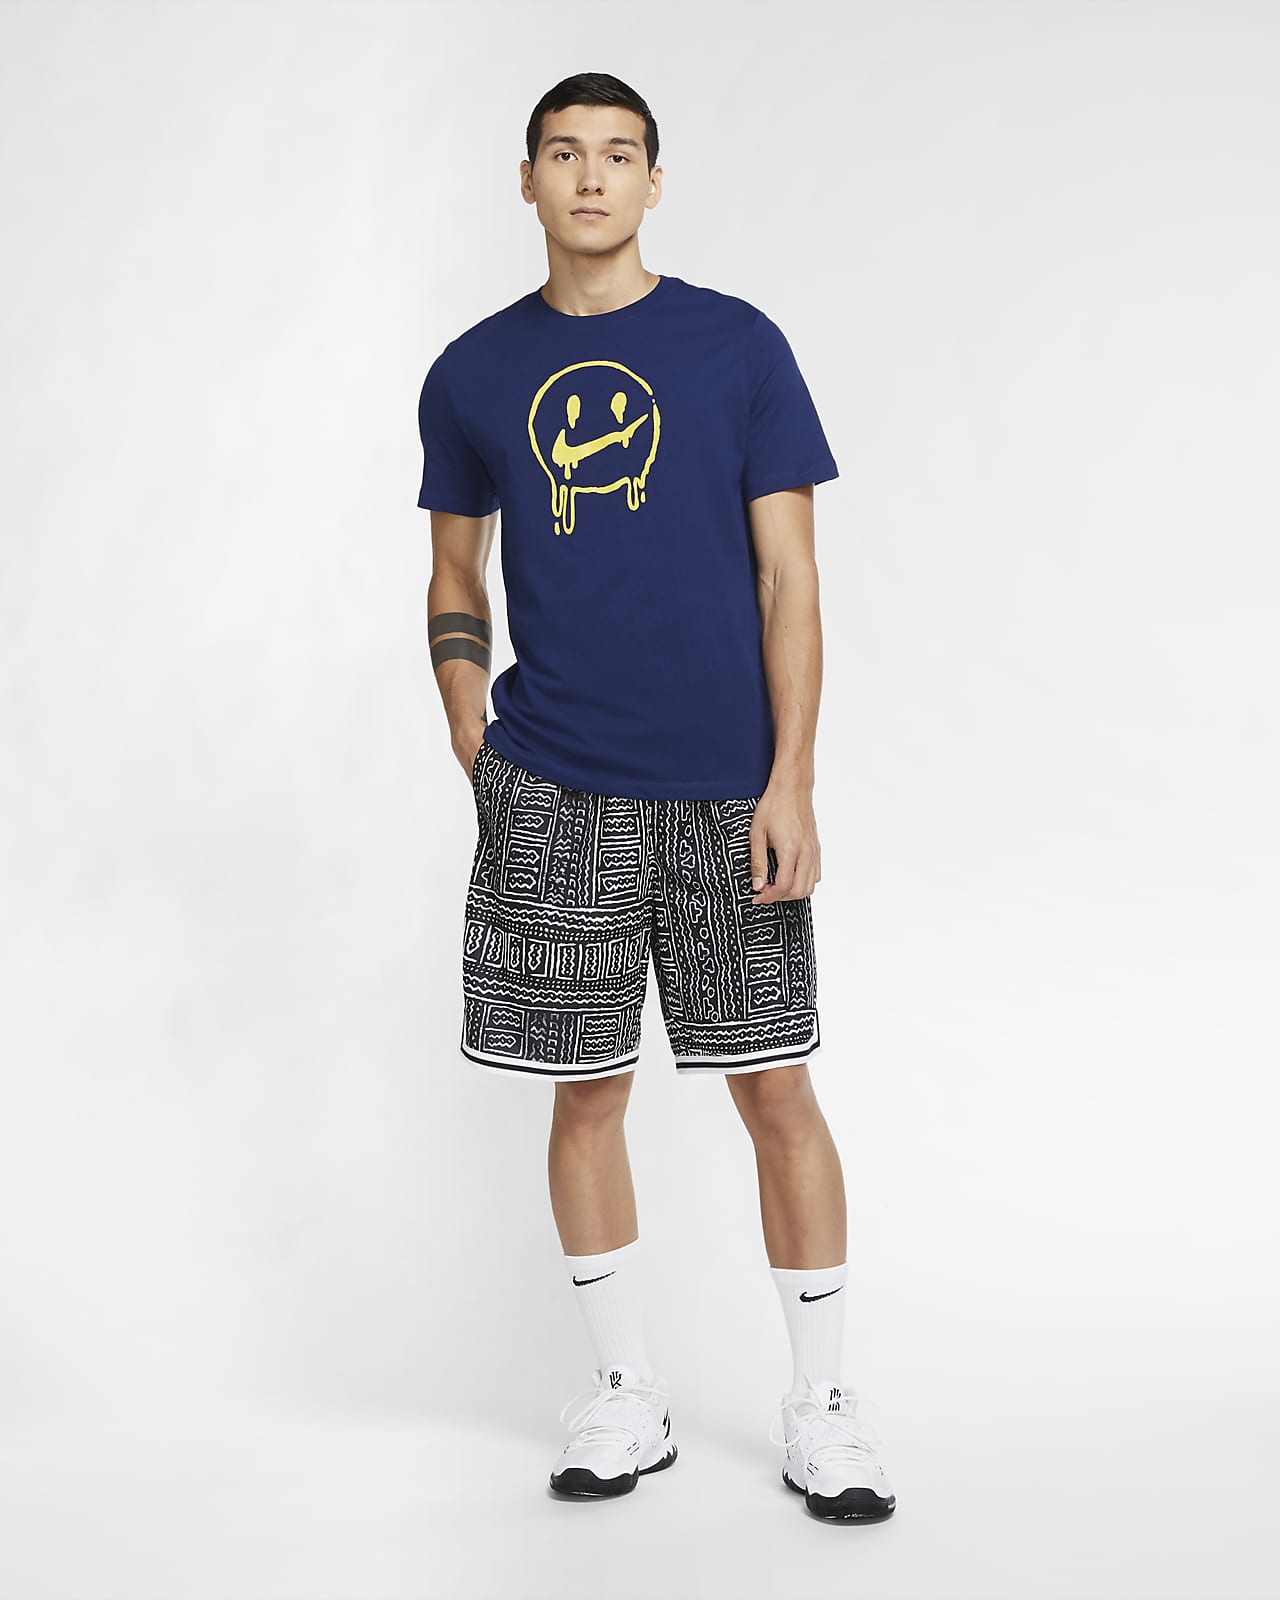 nike basketball t shirt designs